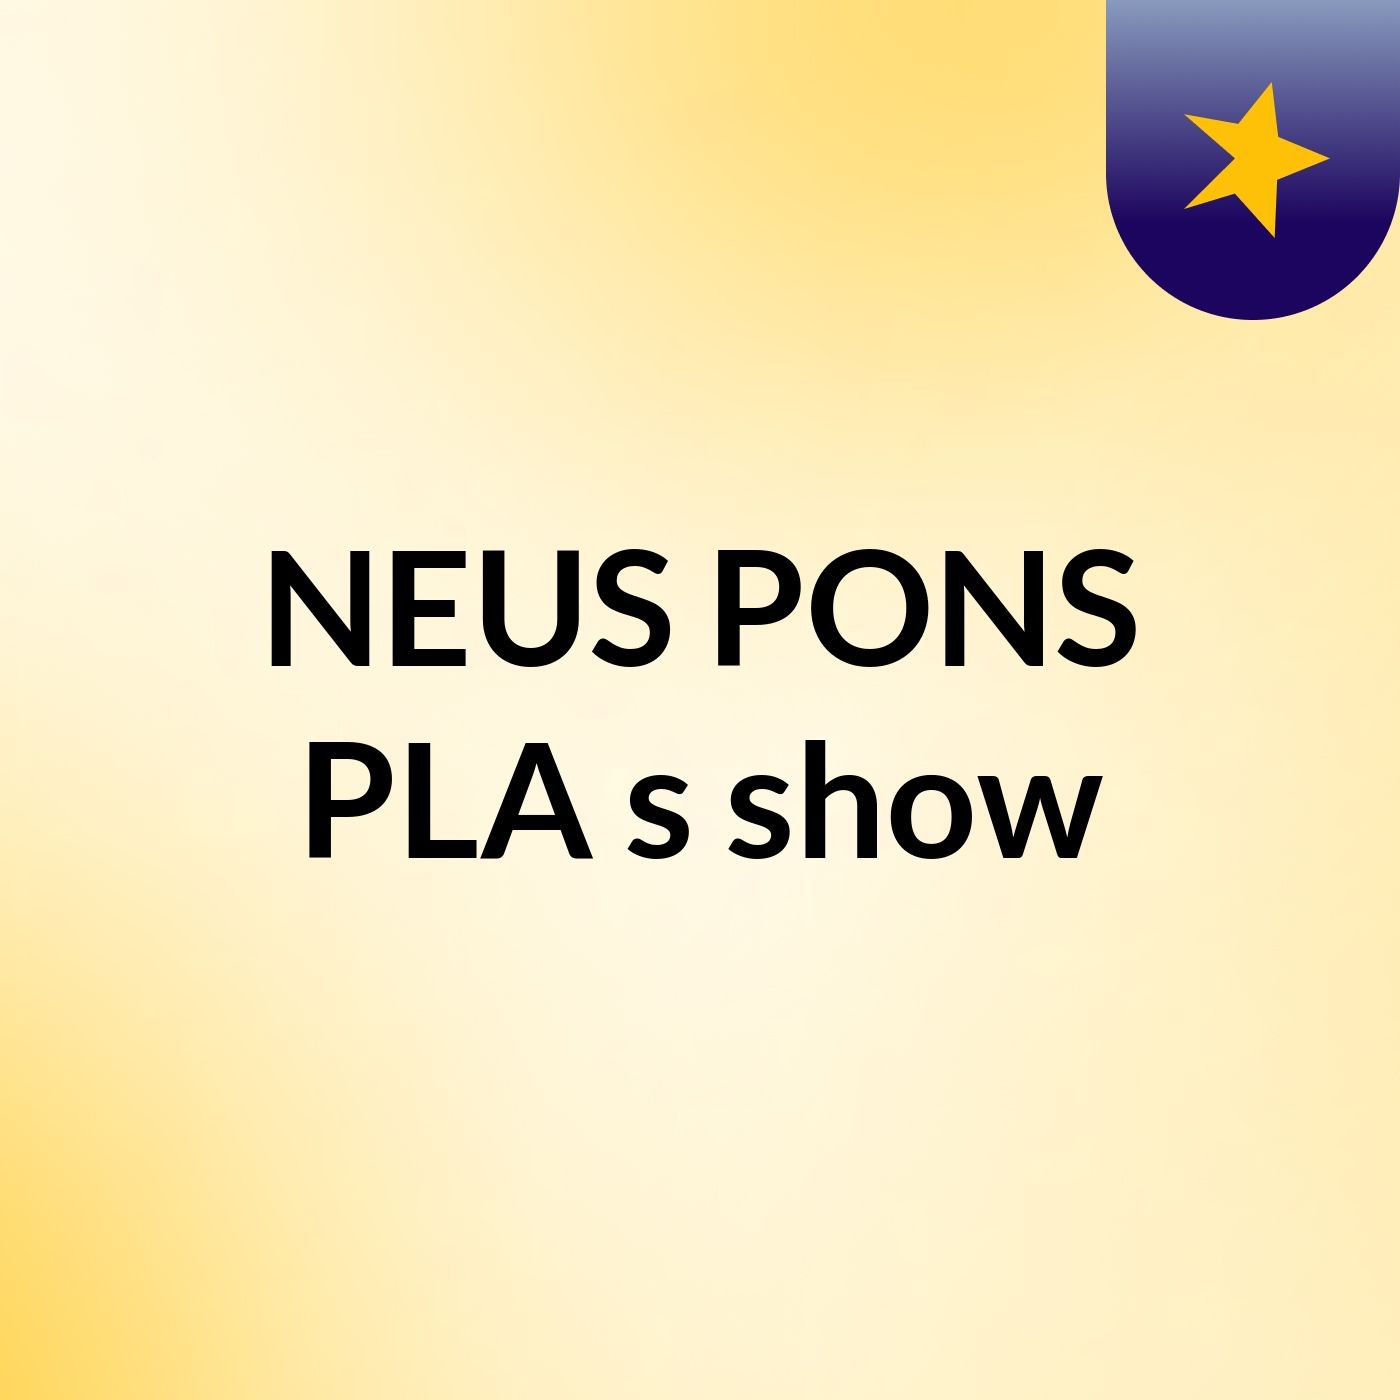 NEUS PONS PLA's show